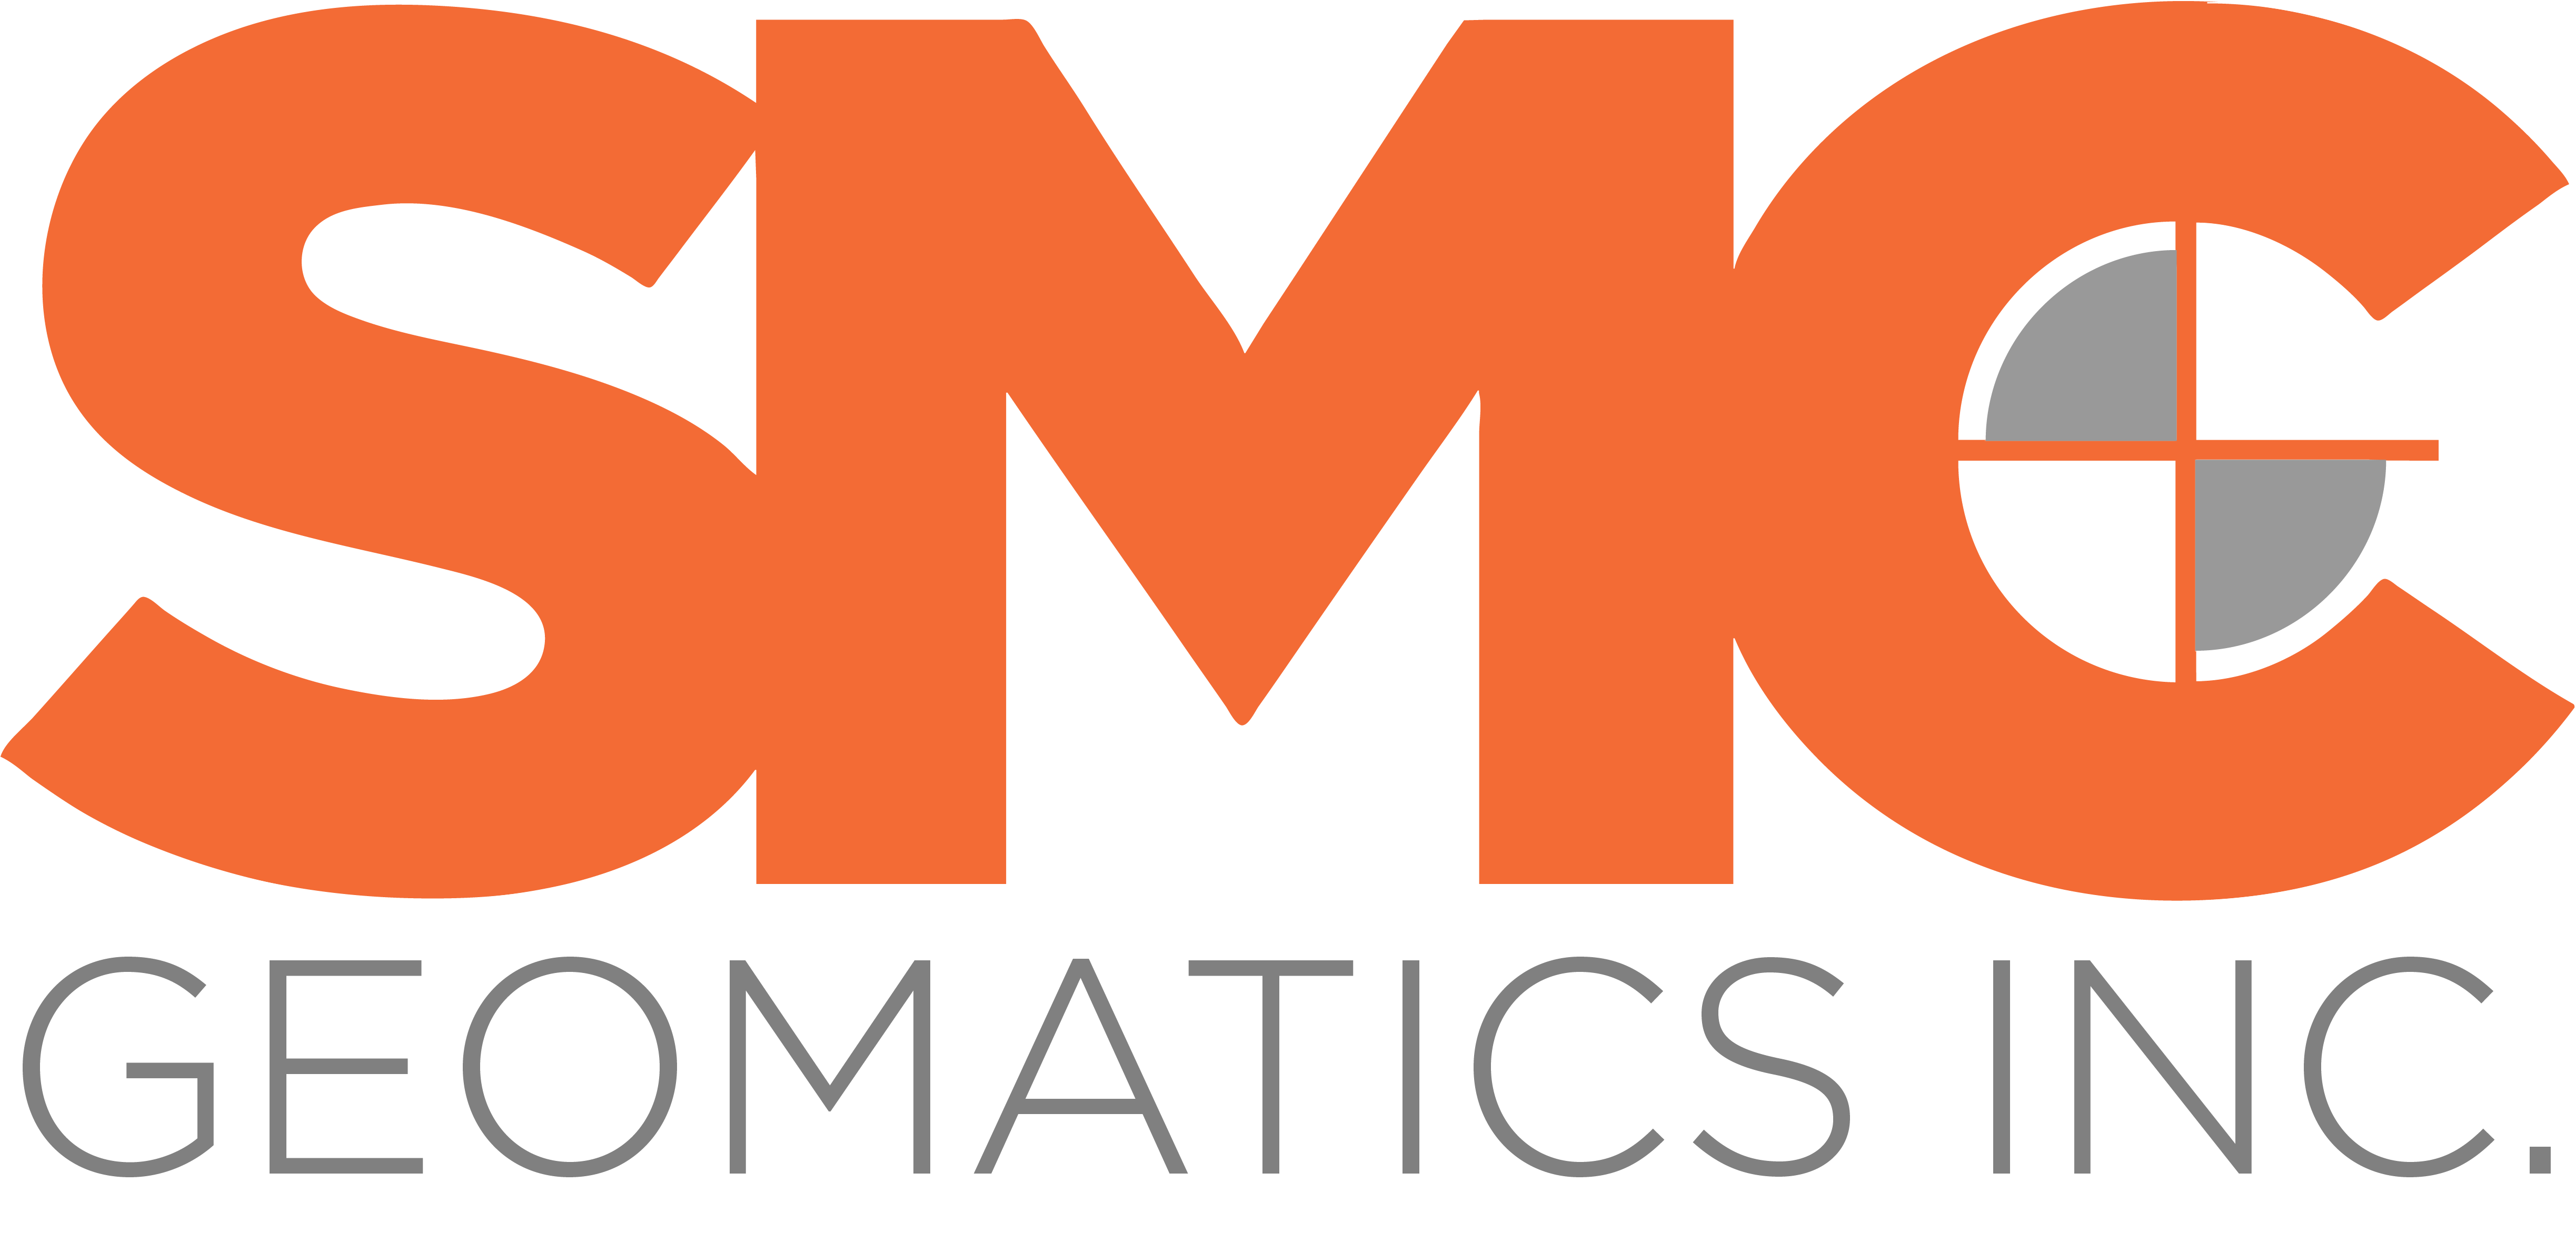 SMC Geomatics Inc